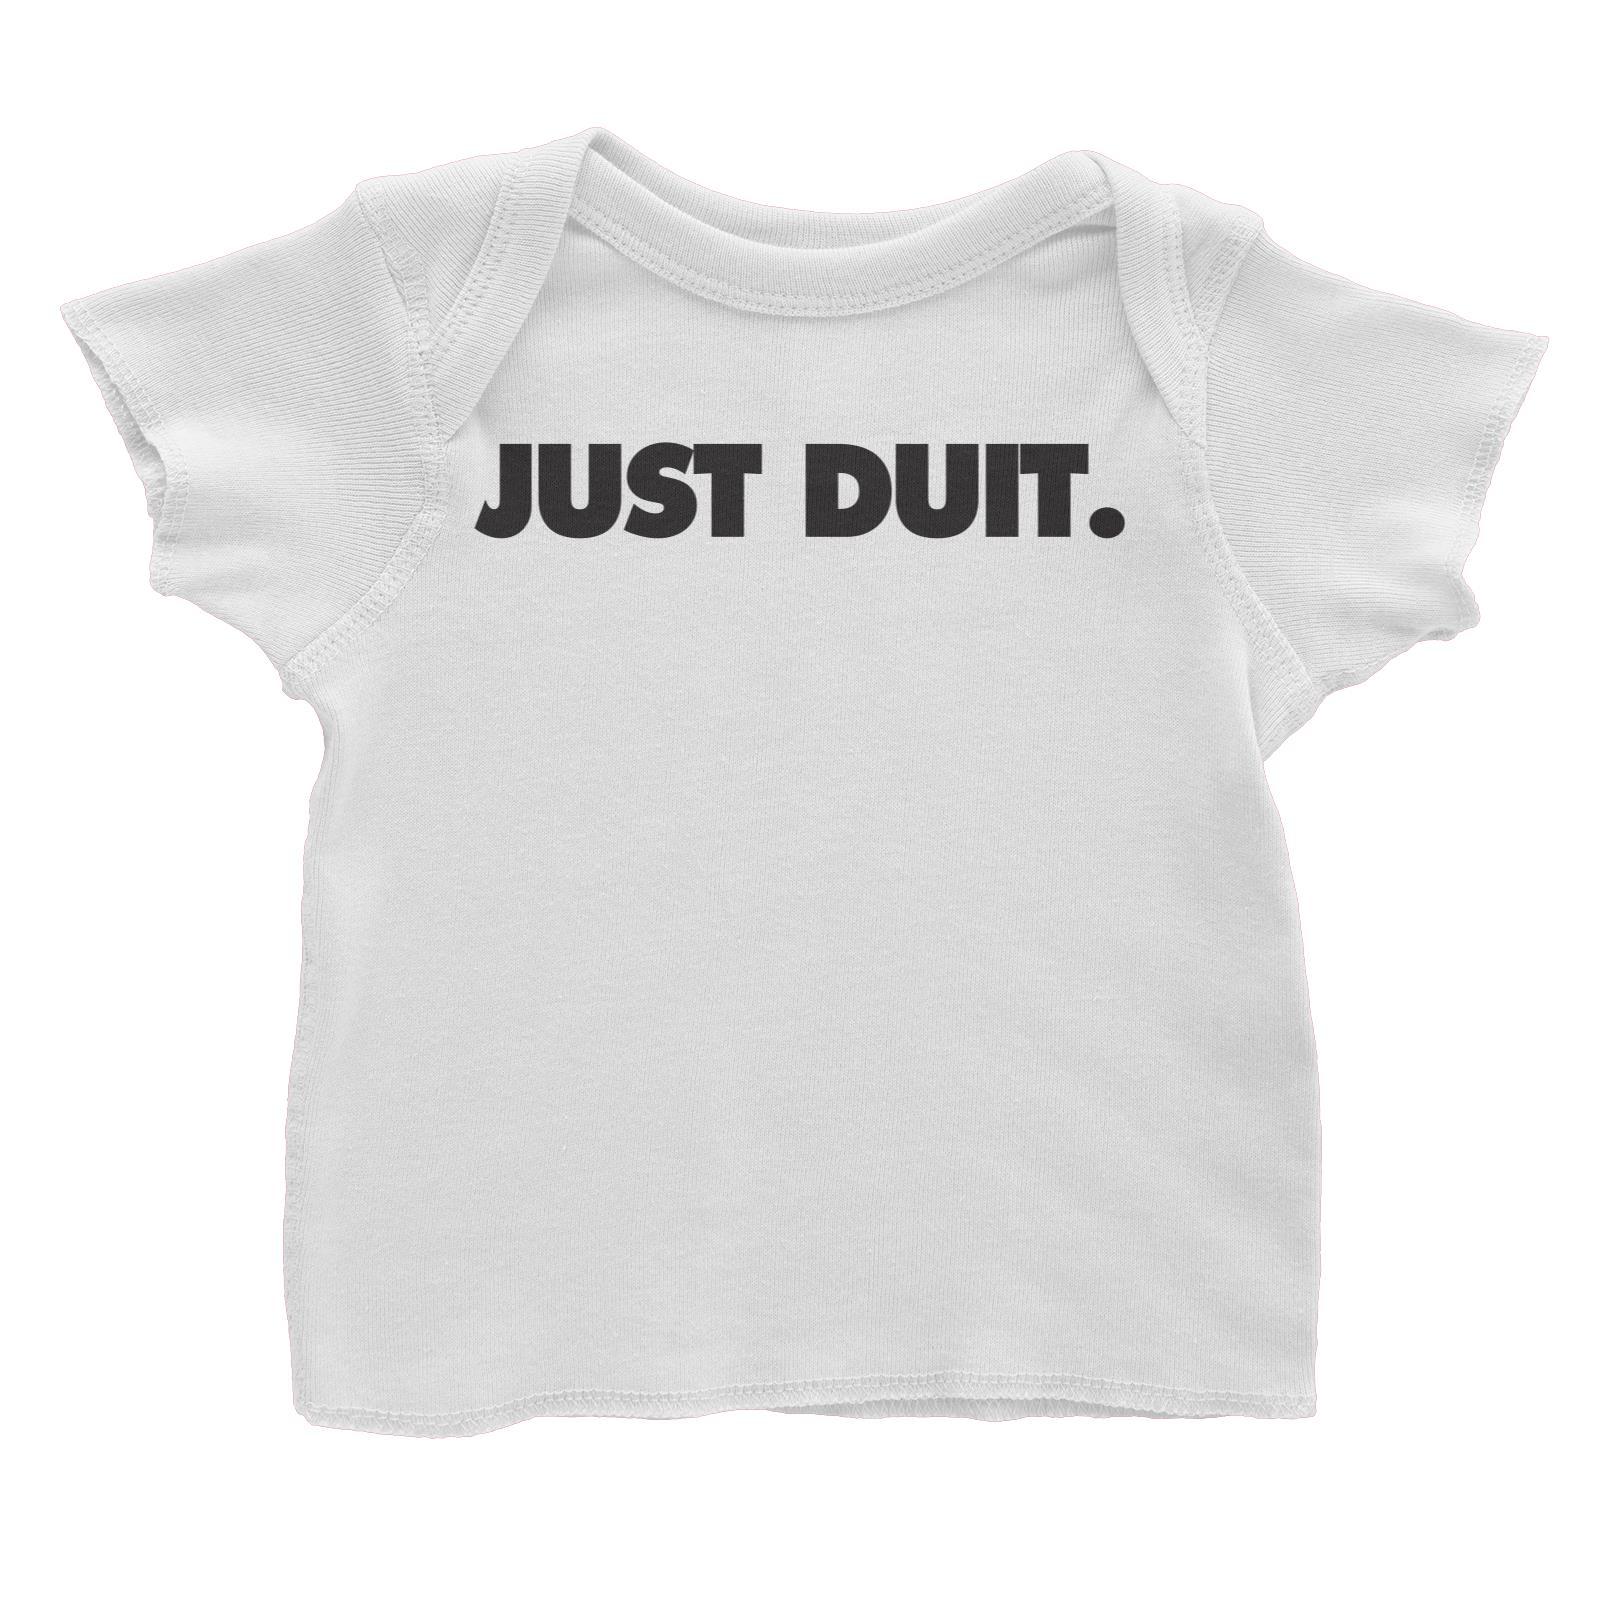 Slang Statement Just Duit Baby T-Shirt